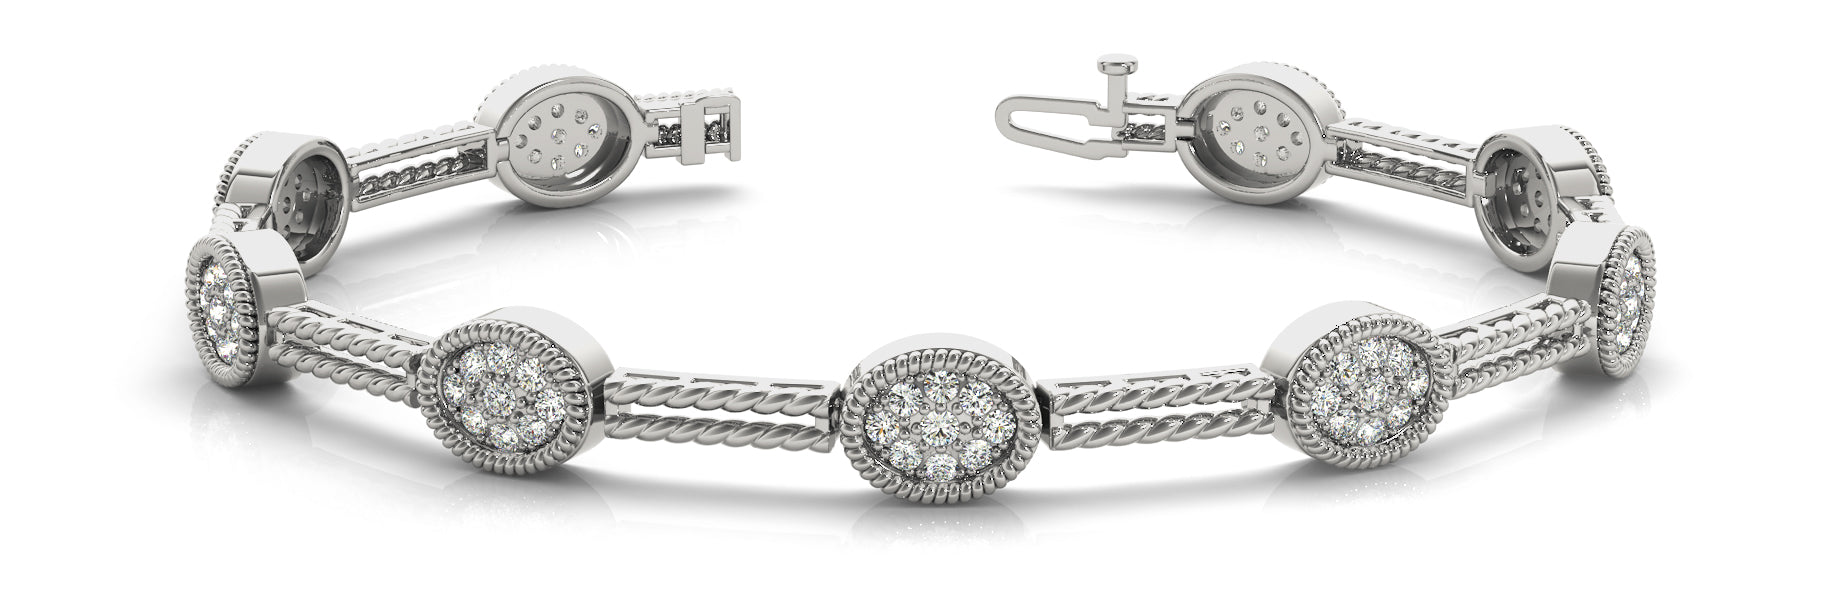 Fancy Diamond Bracelet Ladies 1.91ct tw - 14kt Gold